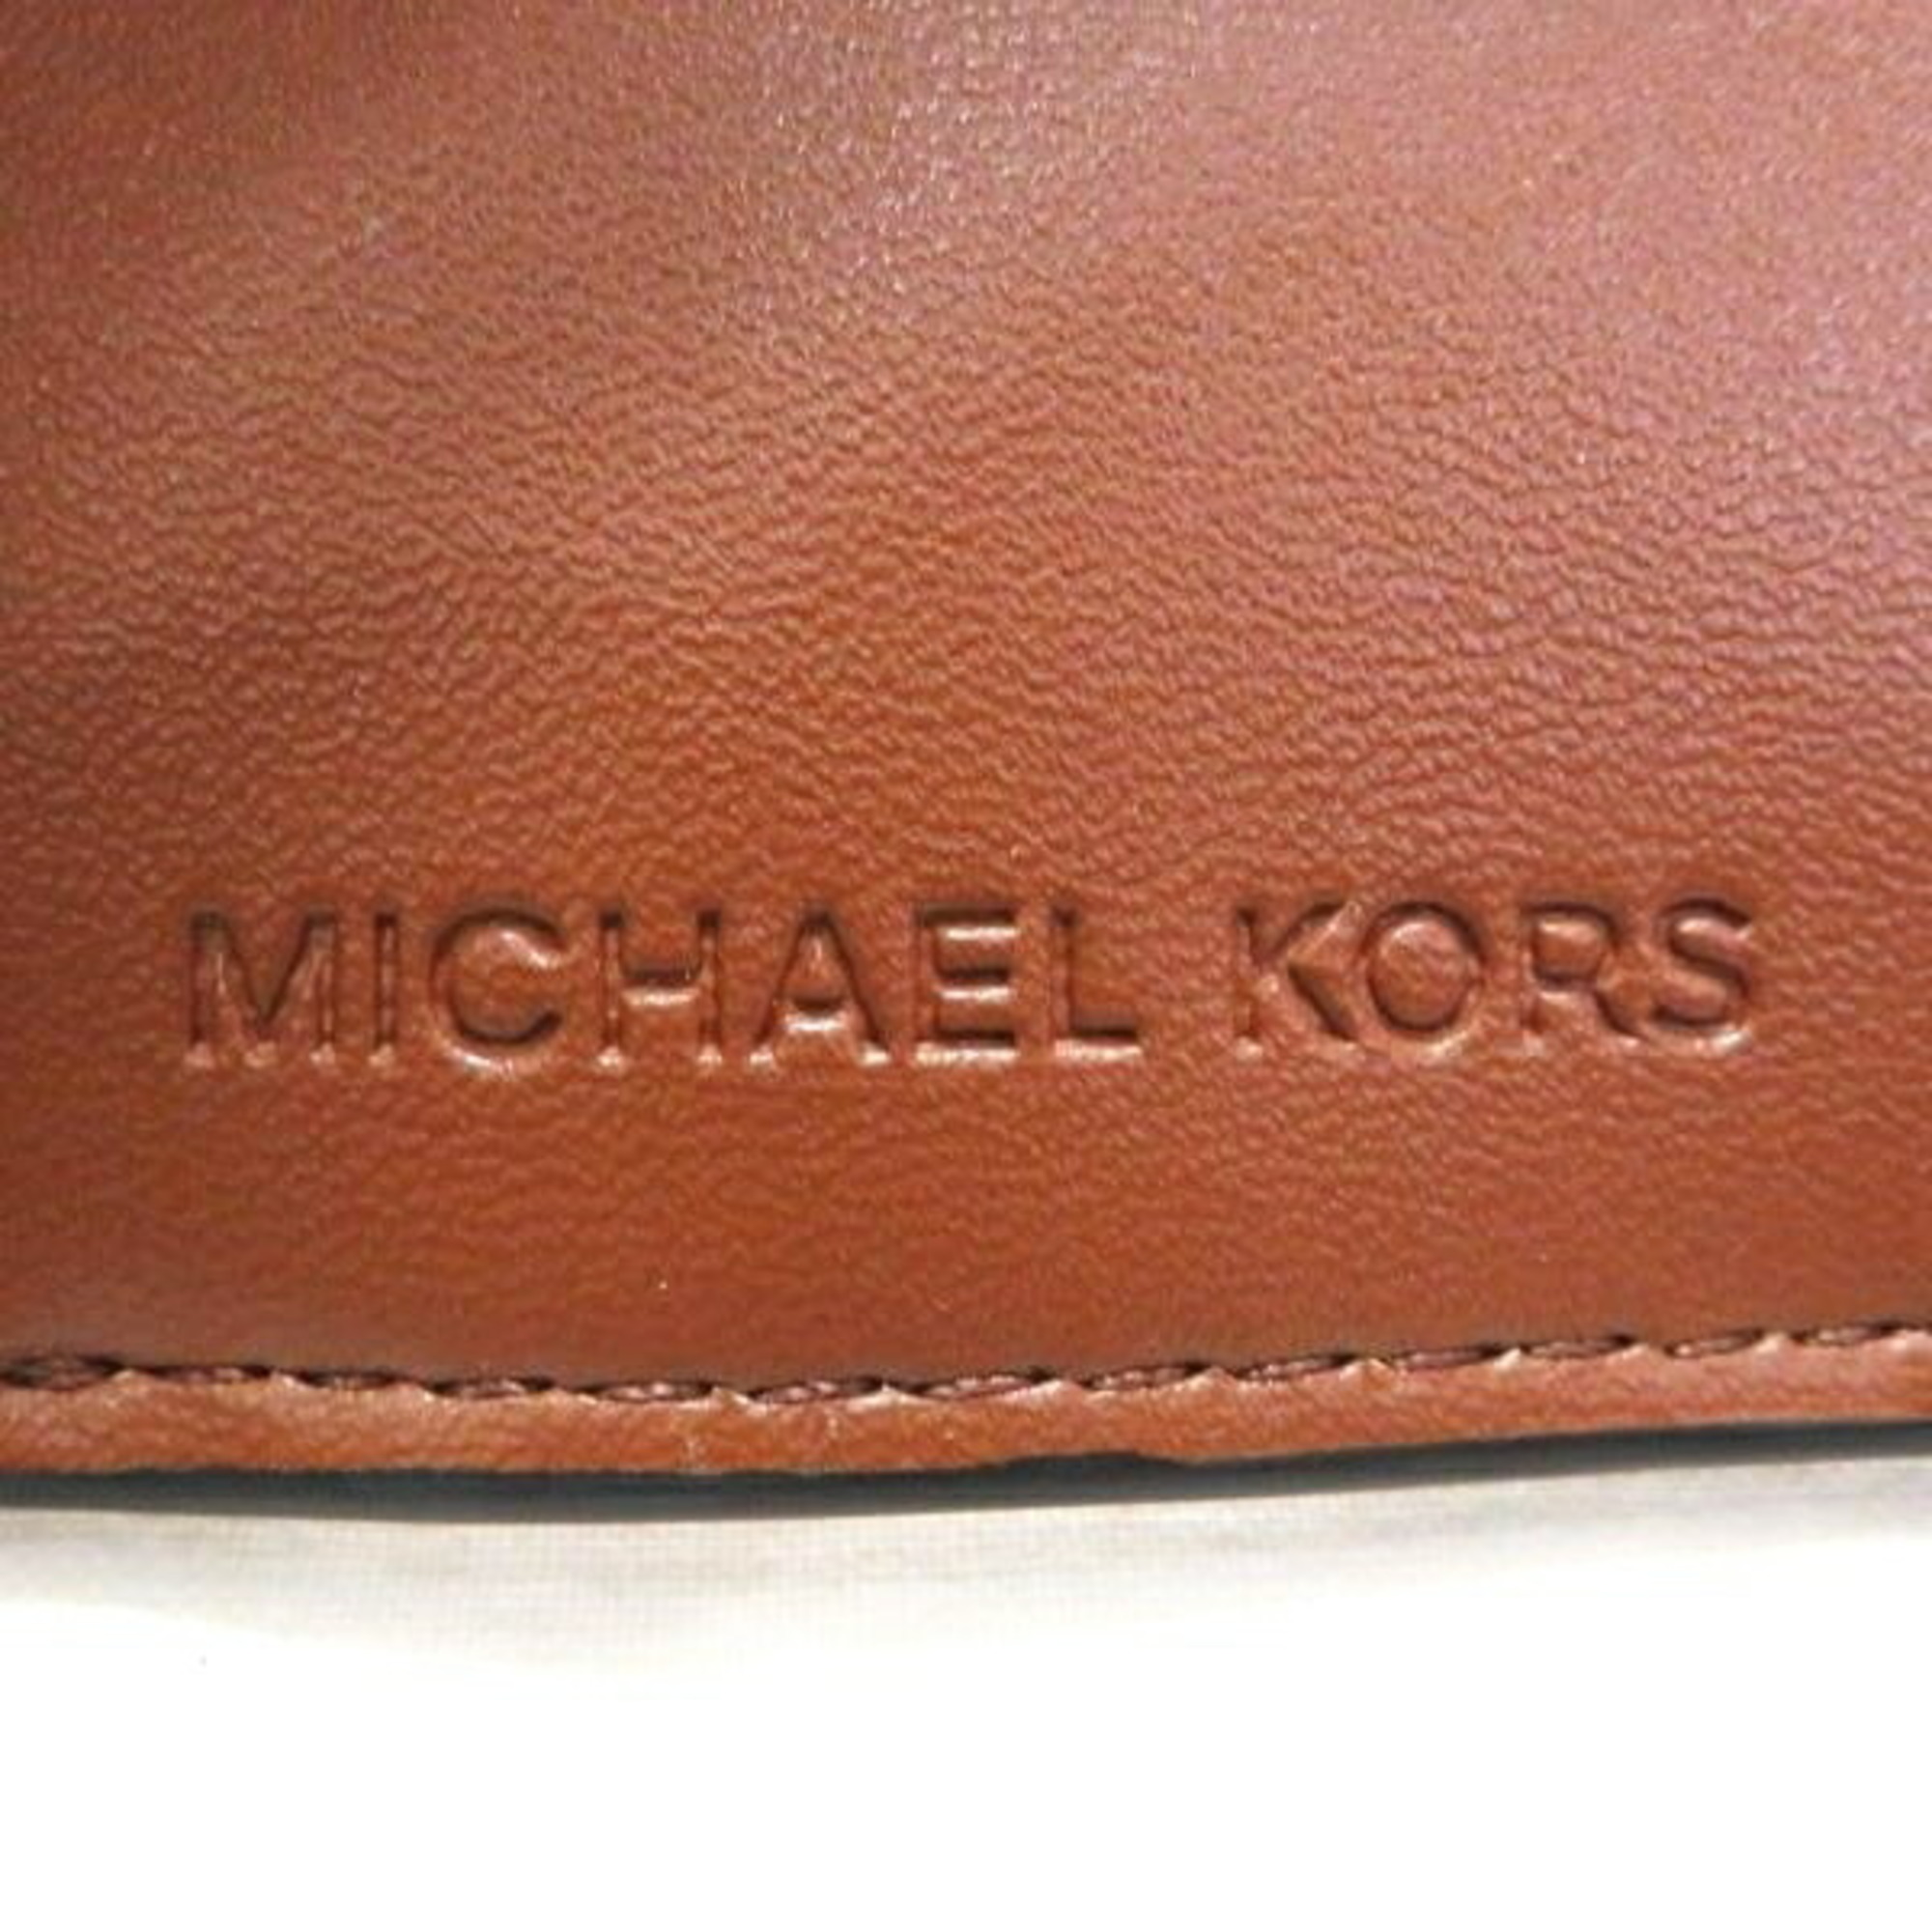 Michael Kors Trifold Compact Wallet Women's